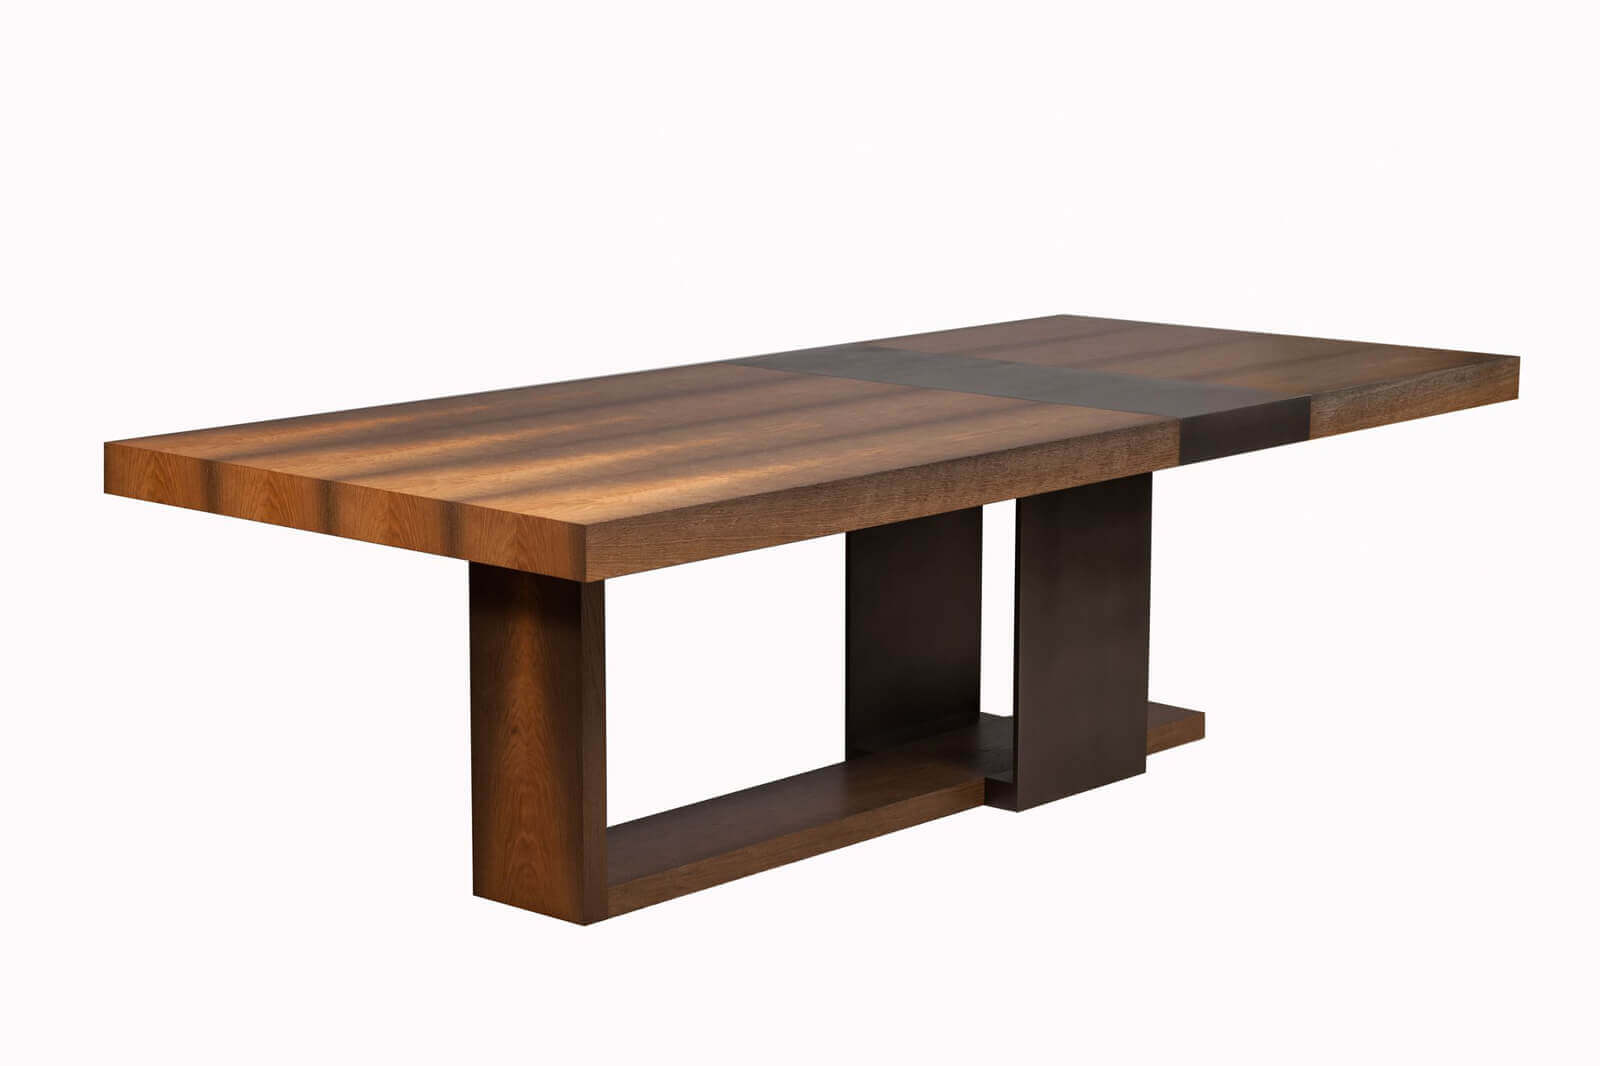 Strap Dining ChairTEST • Mayer Designs